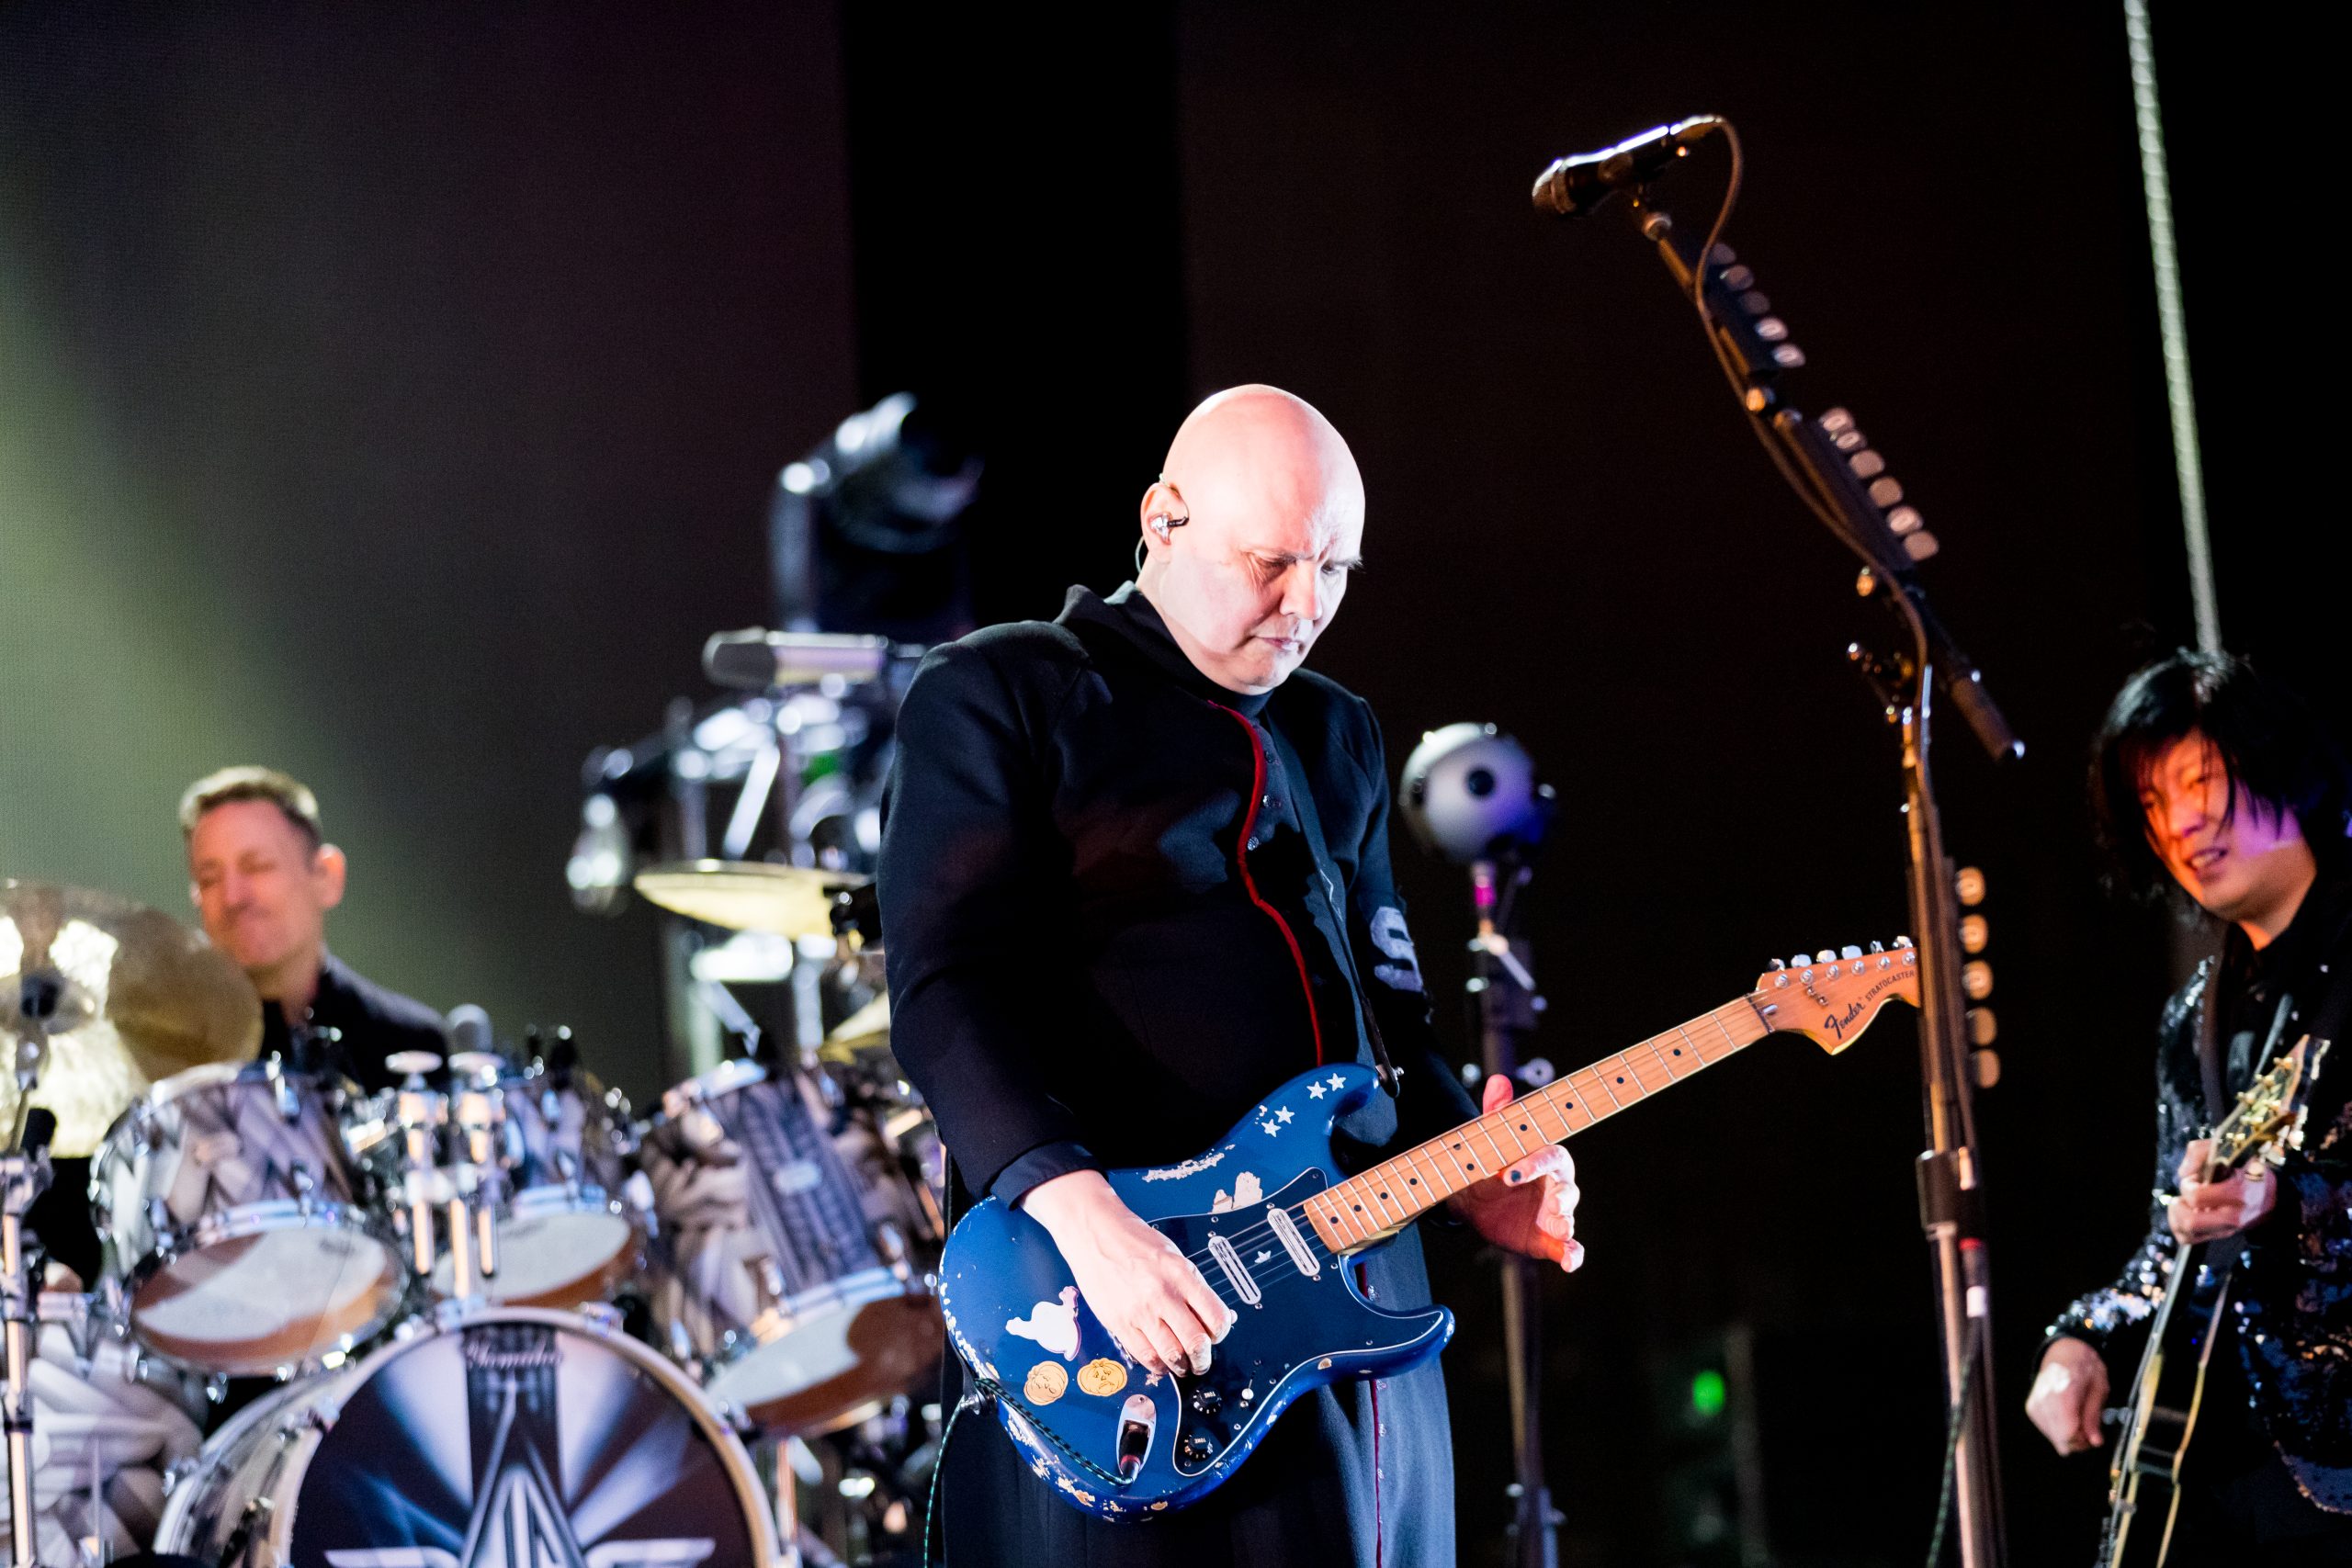 Billy Corgan playing the guitar with The Smashing Pumpkins.